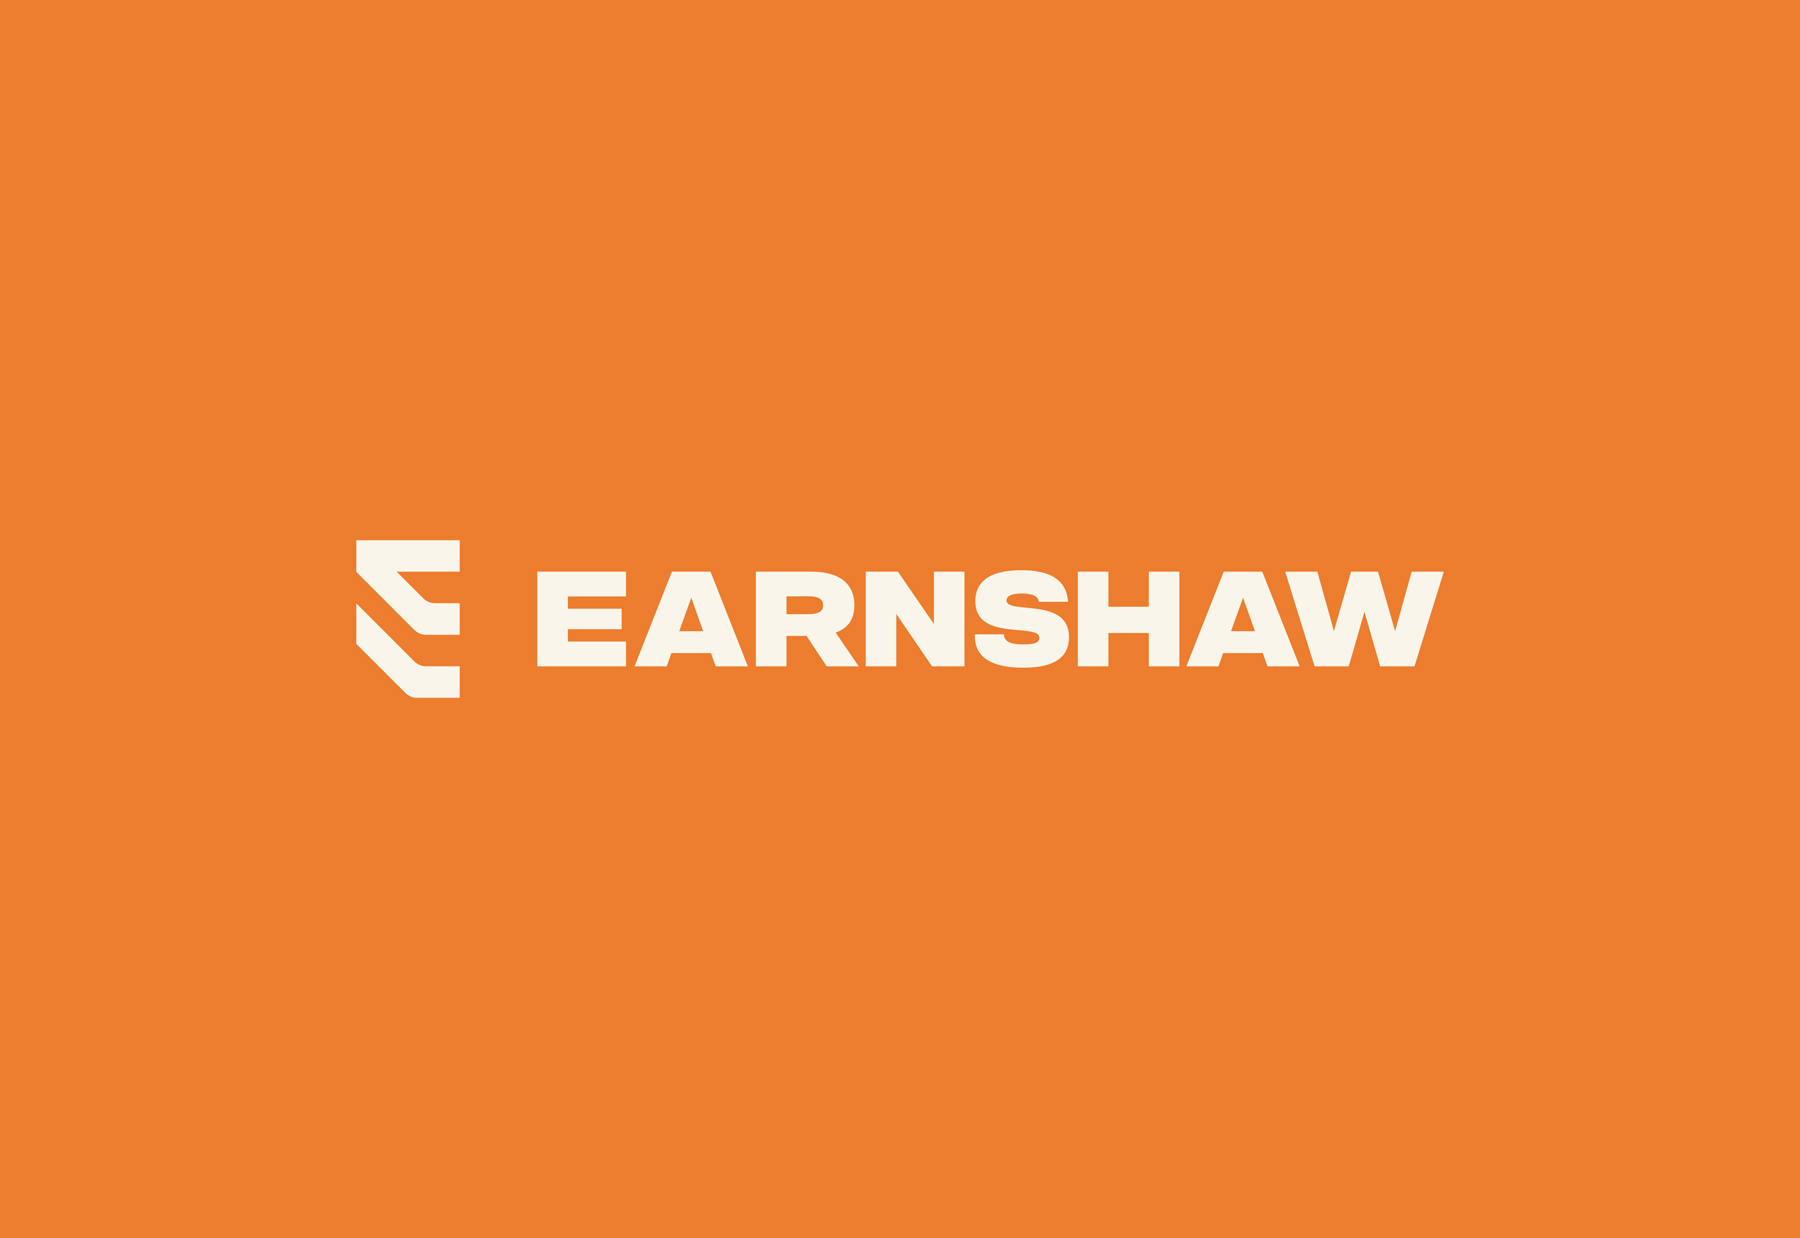 Earnshaw logo design